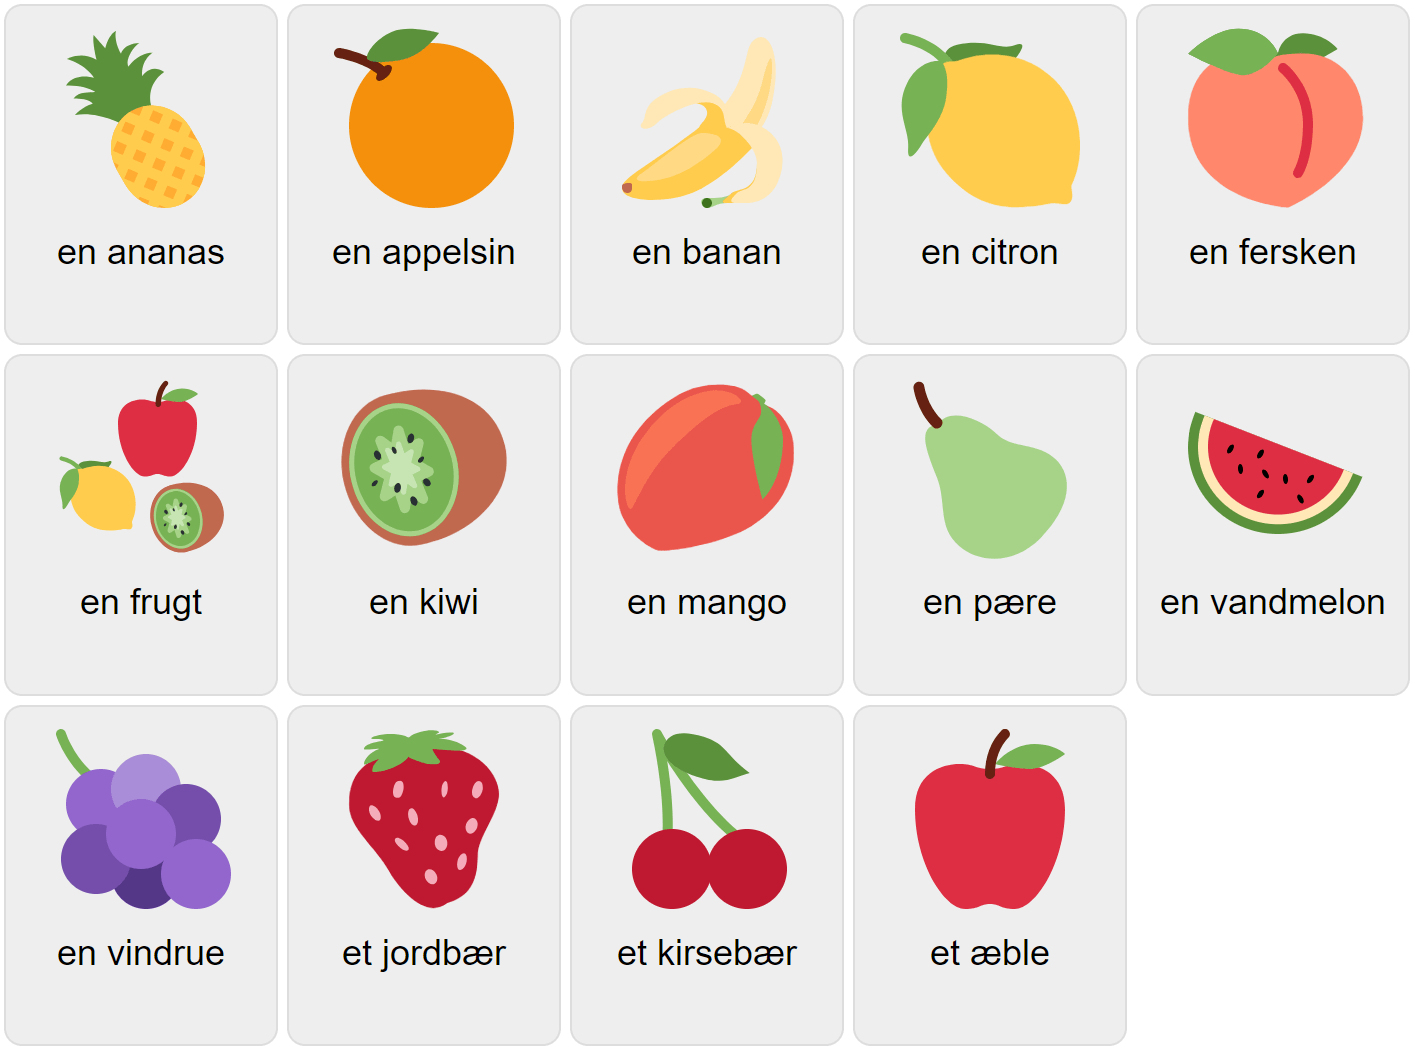 Fruits in Danish